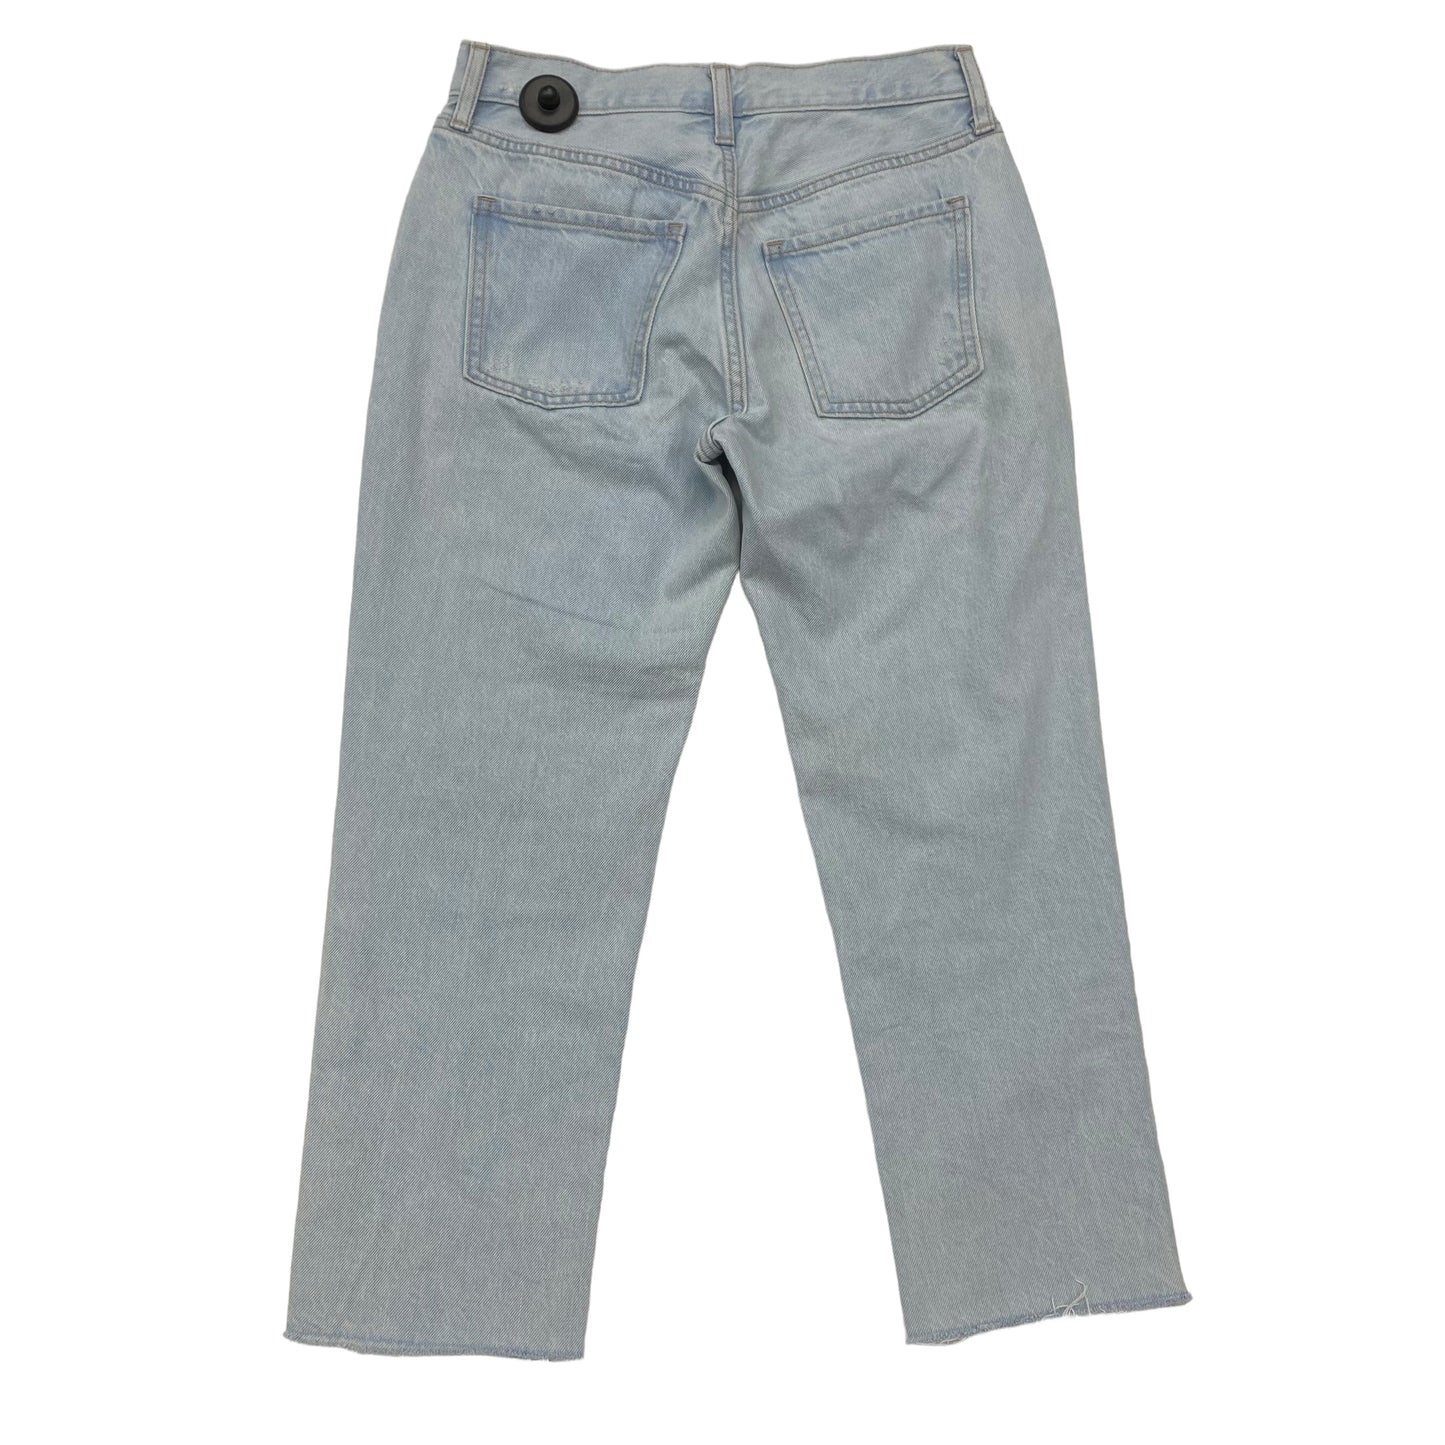 Blue Denim Jeans Straight Old Navy, Size 0